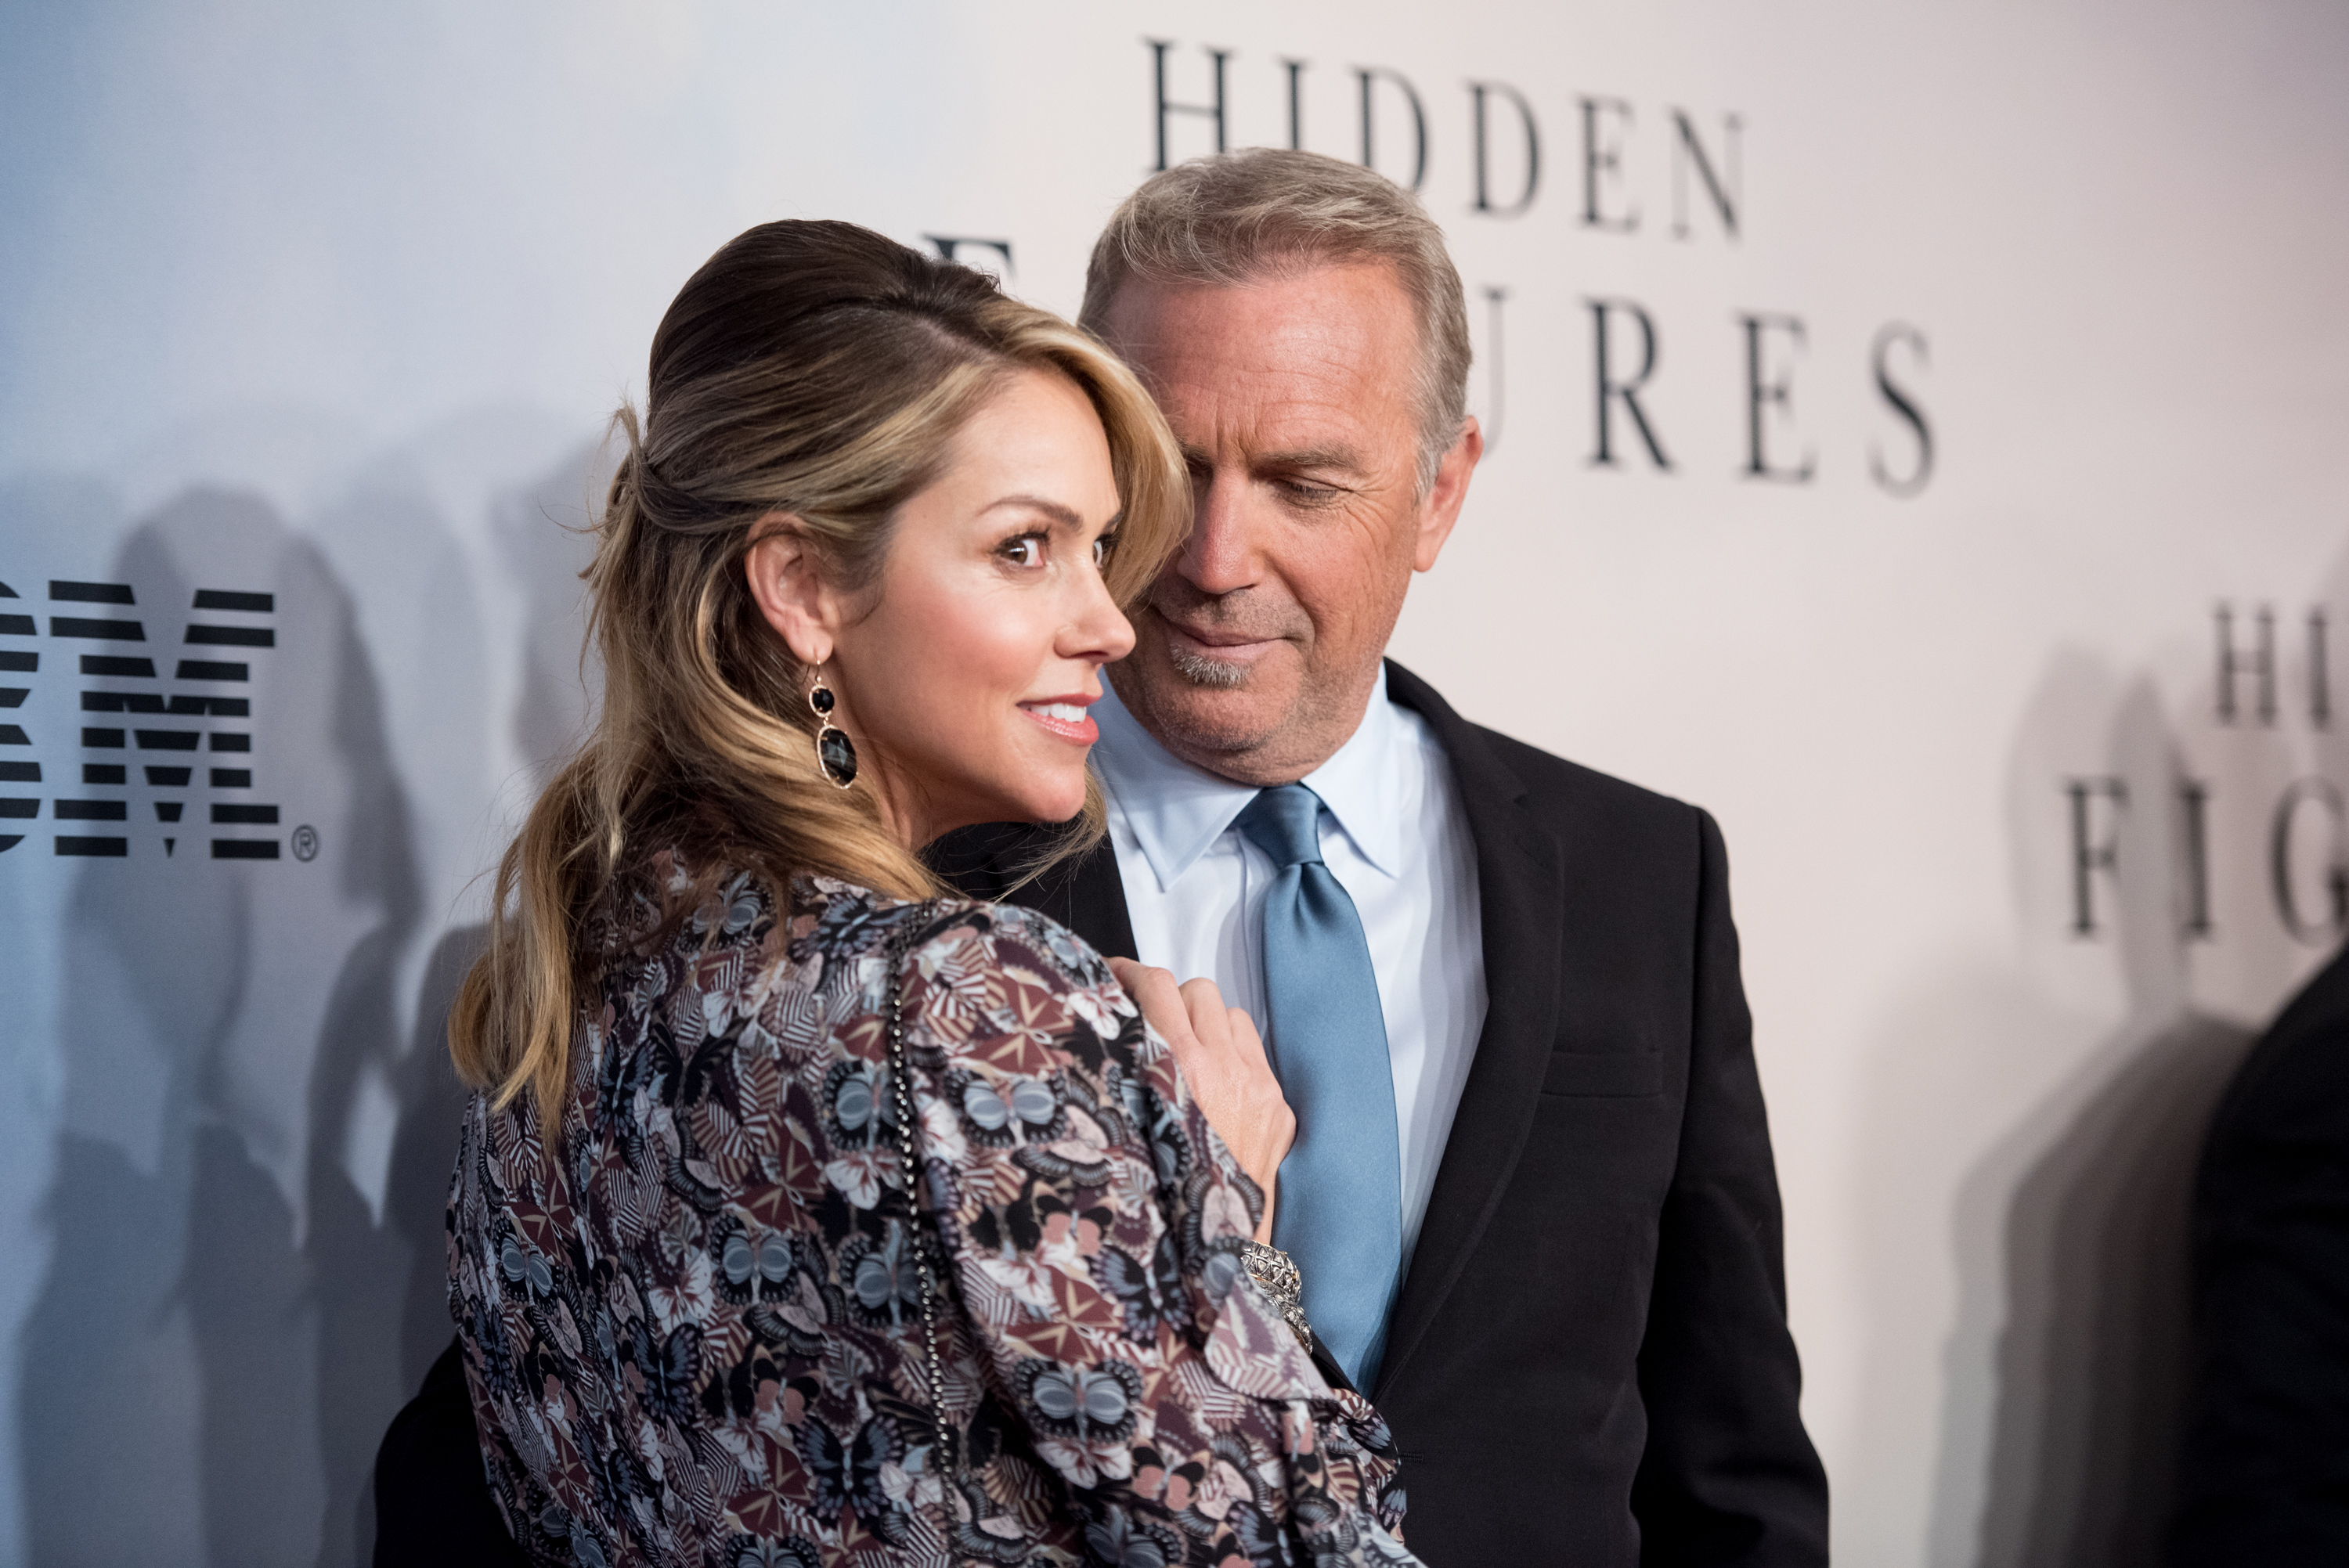 Christine Baumgartner and Kevin Costner at the "Hidden Figures" New York special screening on December 10, 2016 | Source: Getty Images